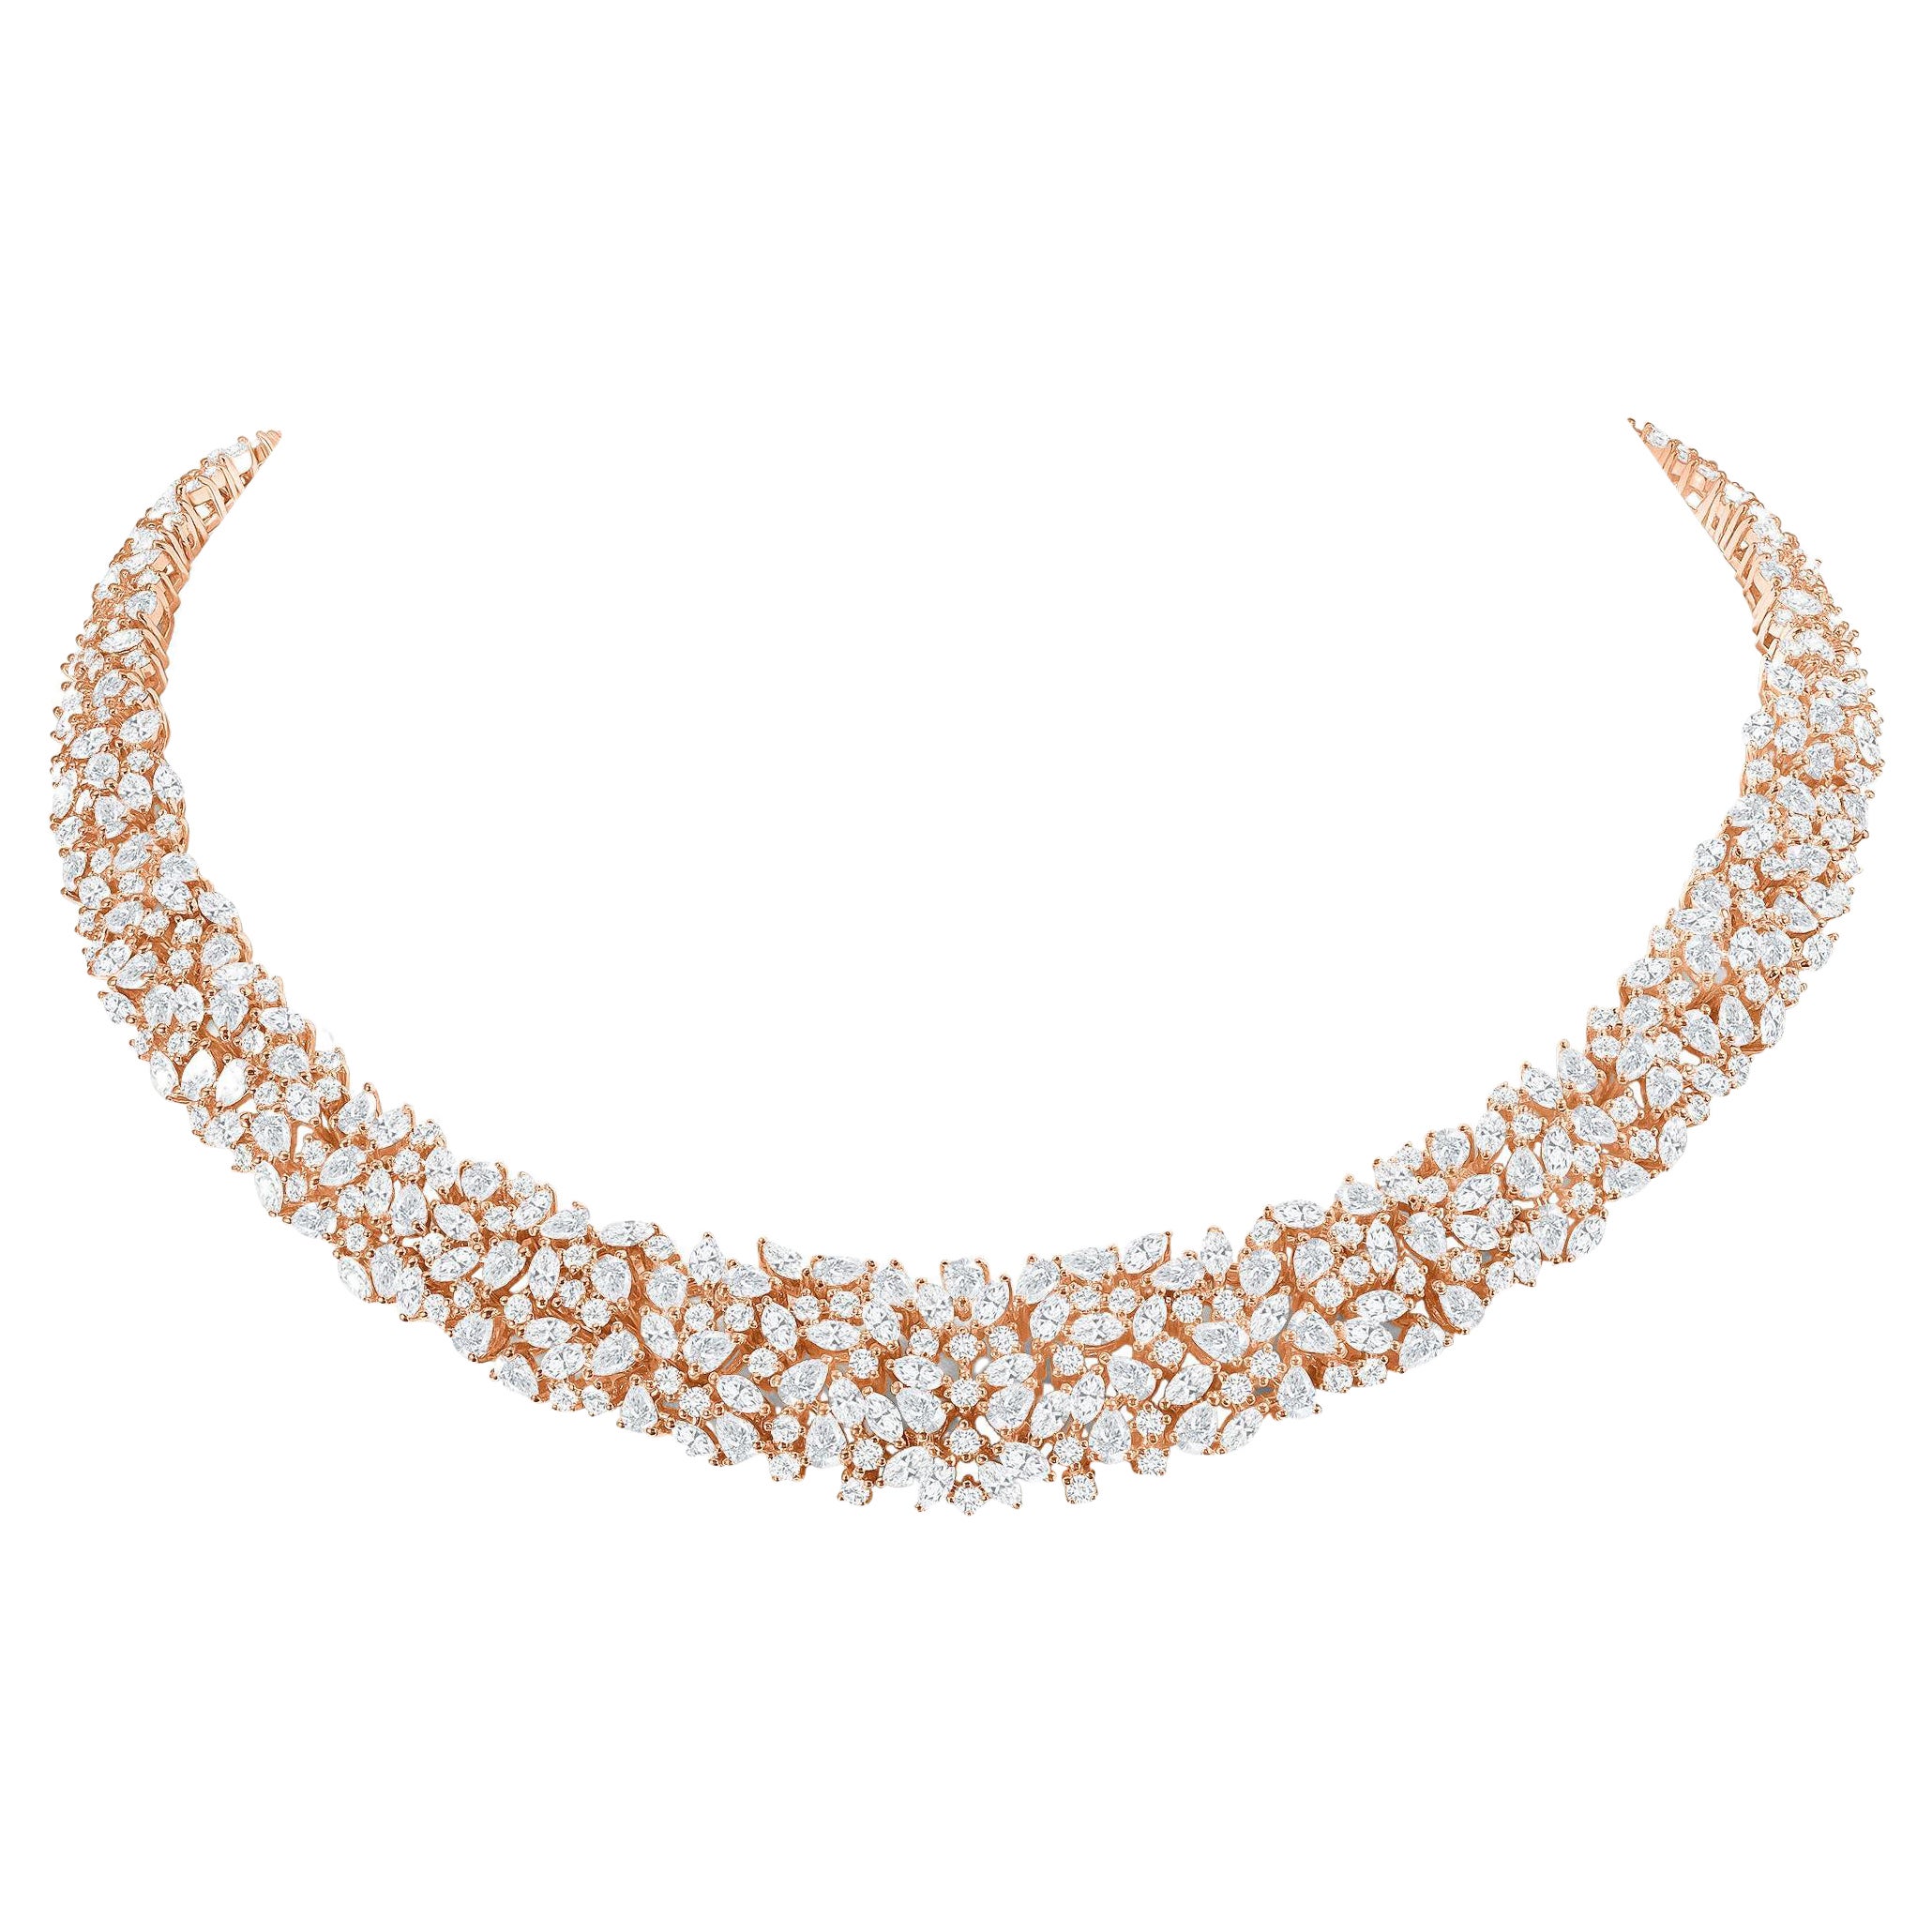 30 Carat Diamond Cluster Necklace, 18K Rose Gold